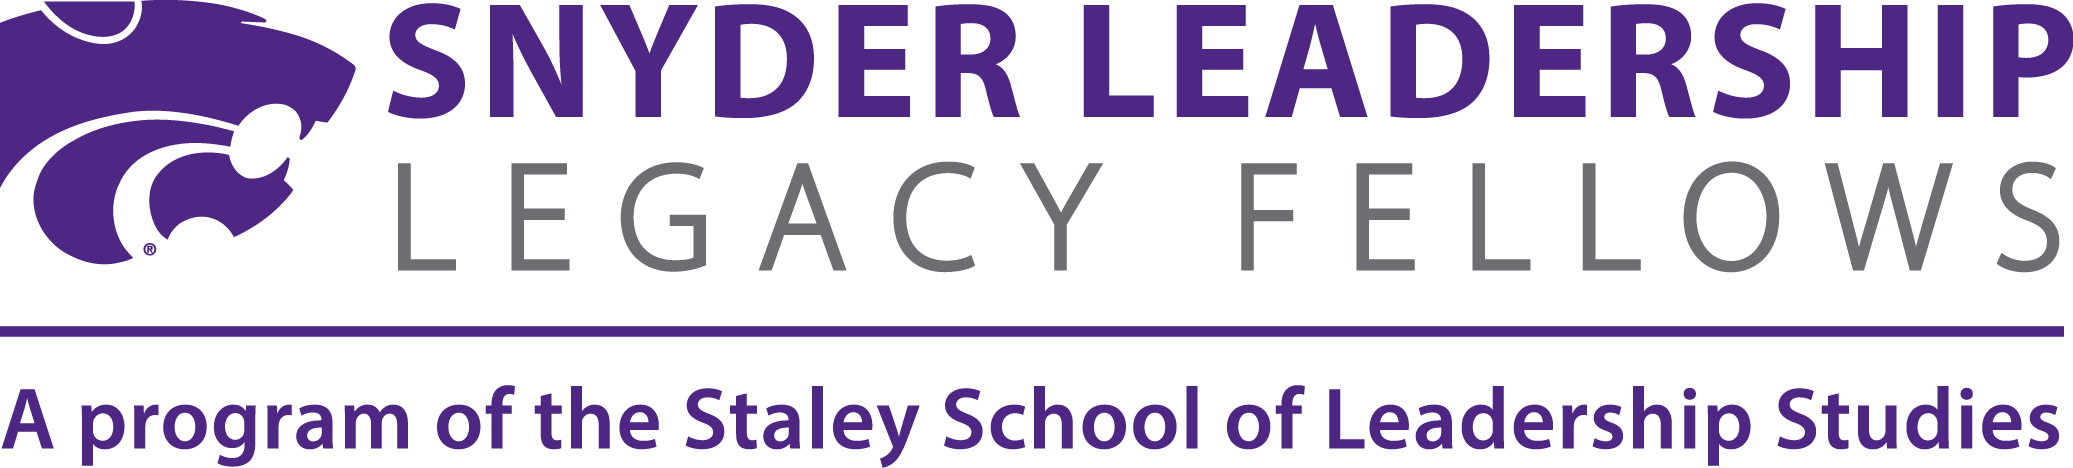 The Snyder Leadership Legacy Fellows Program